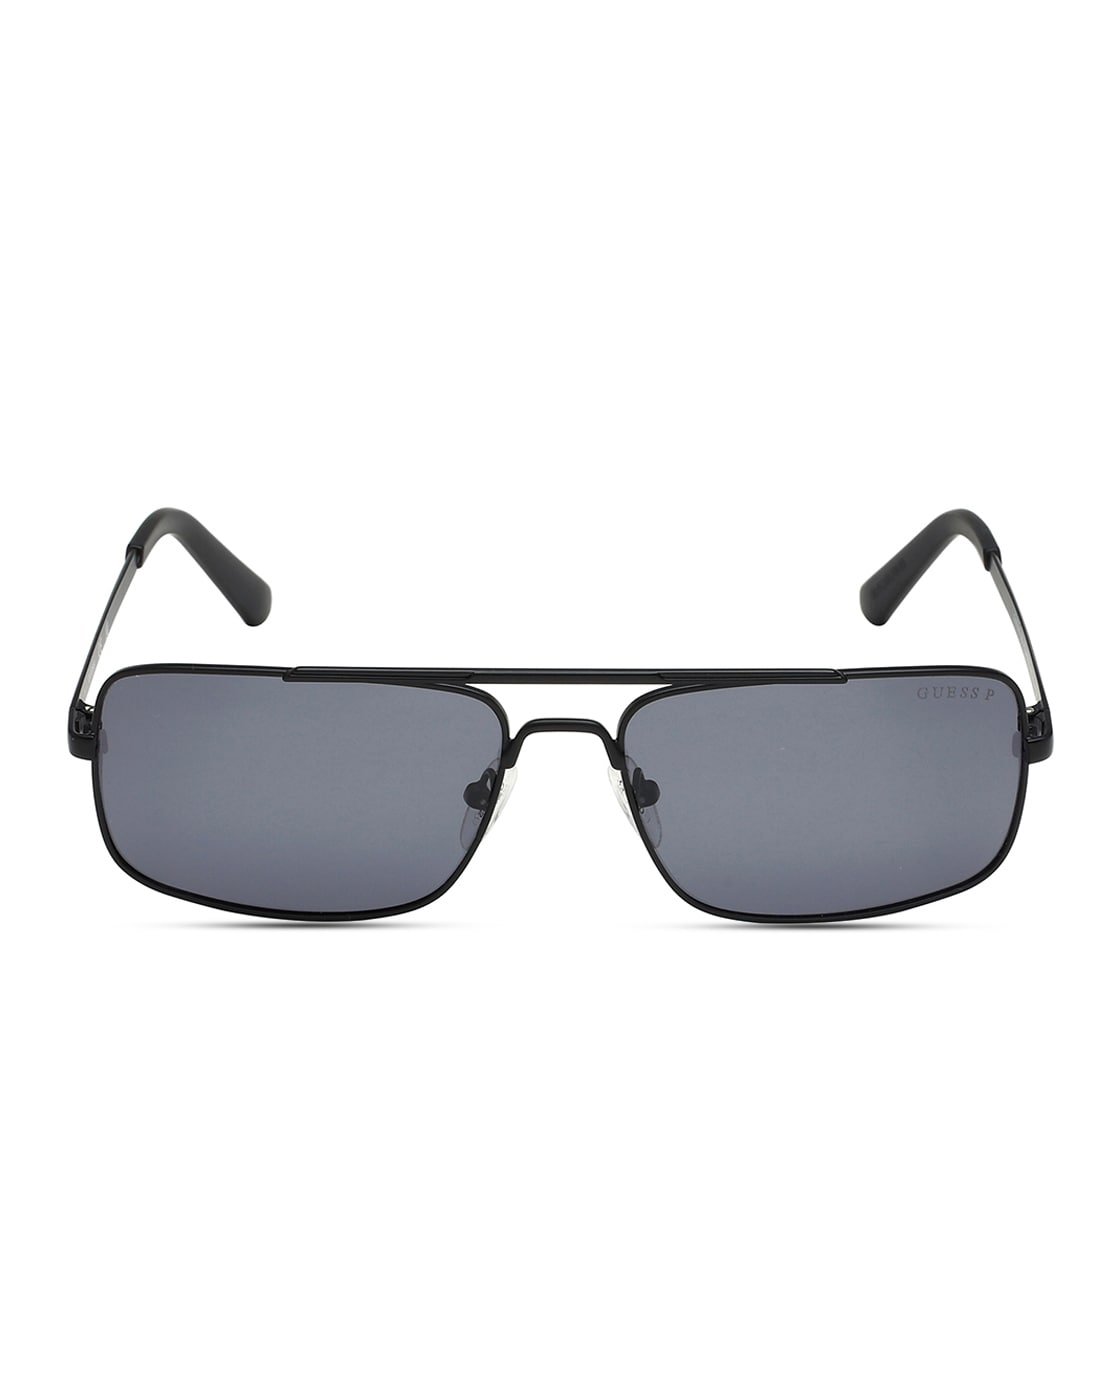 Men UV-Protected Square Sunglasses - GU00060 02D 60 S